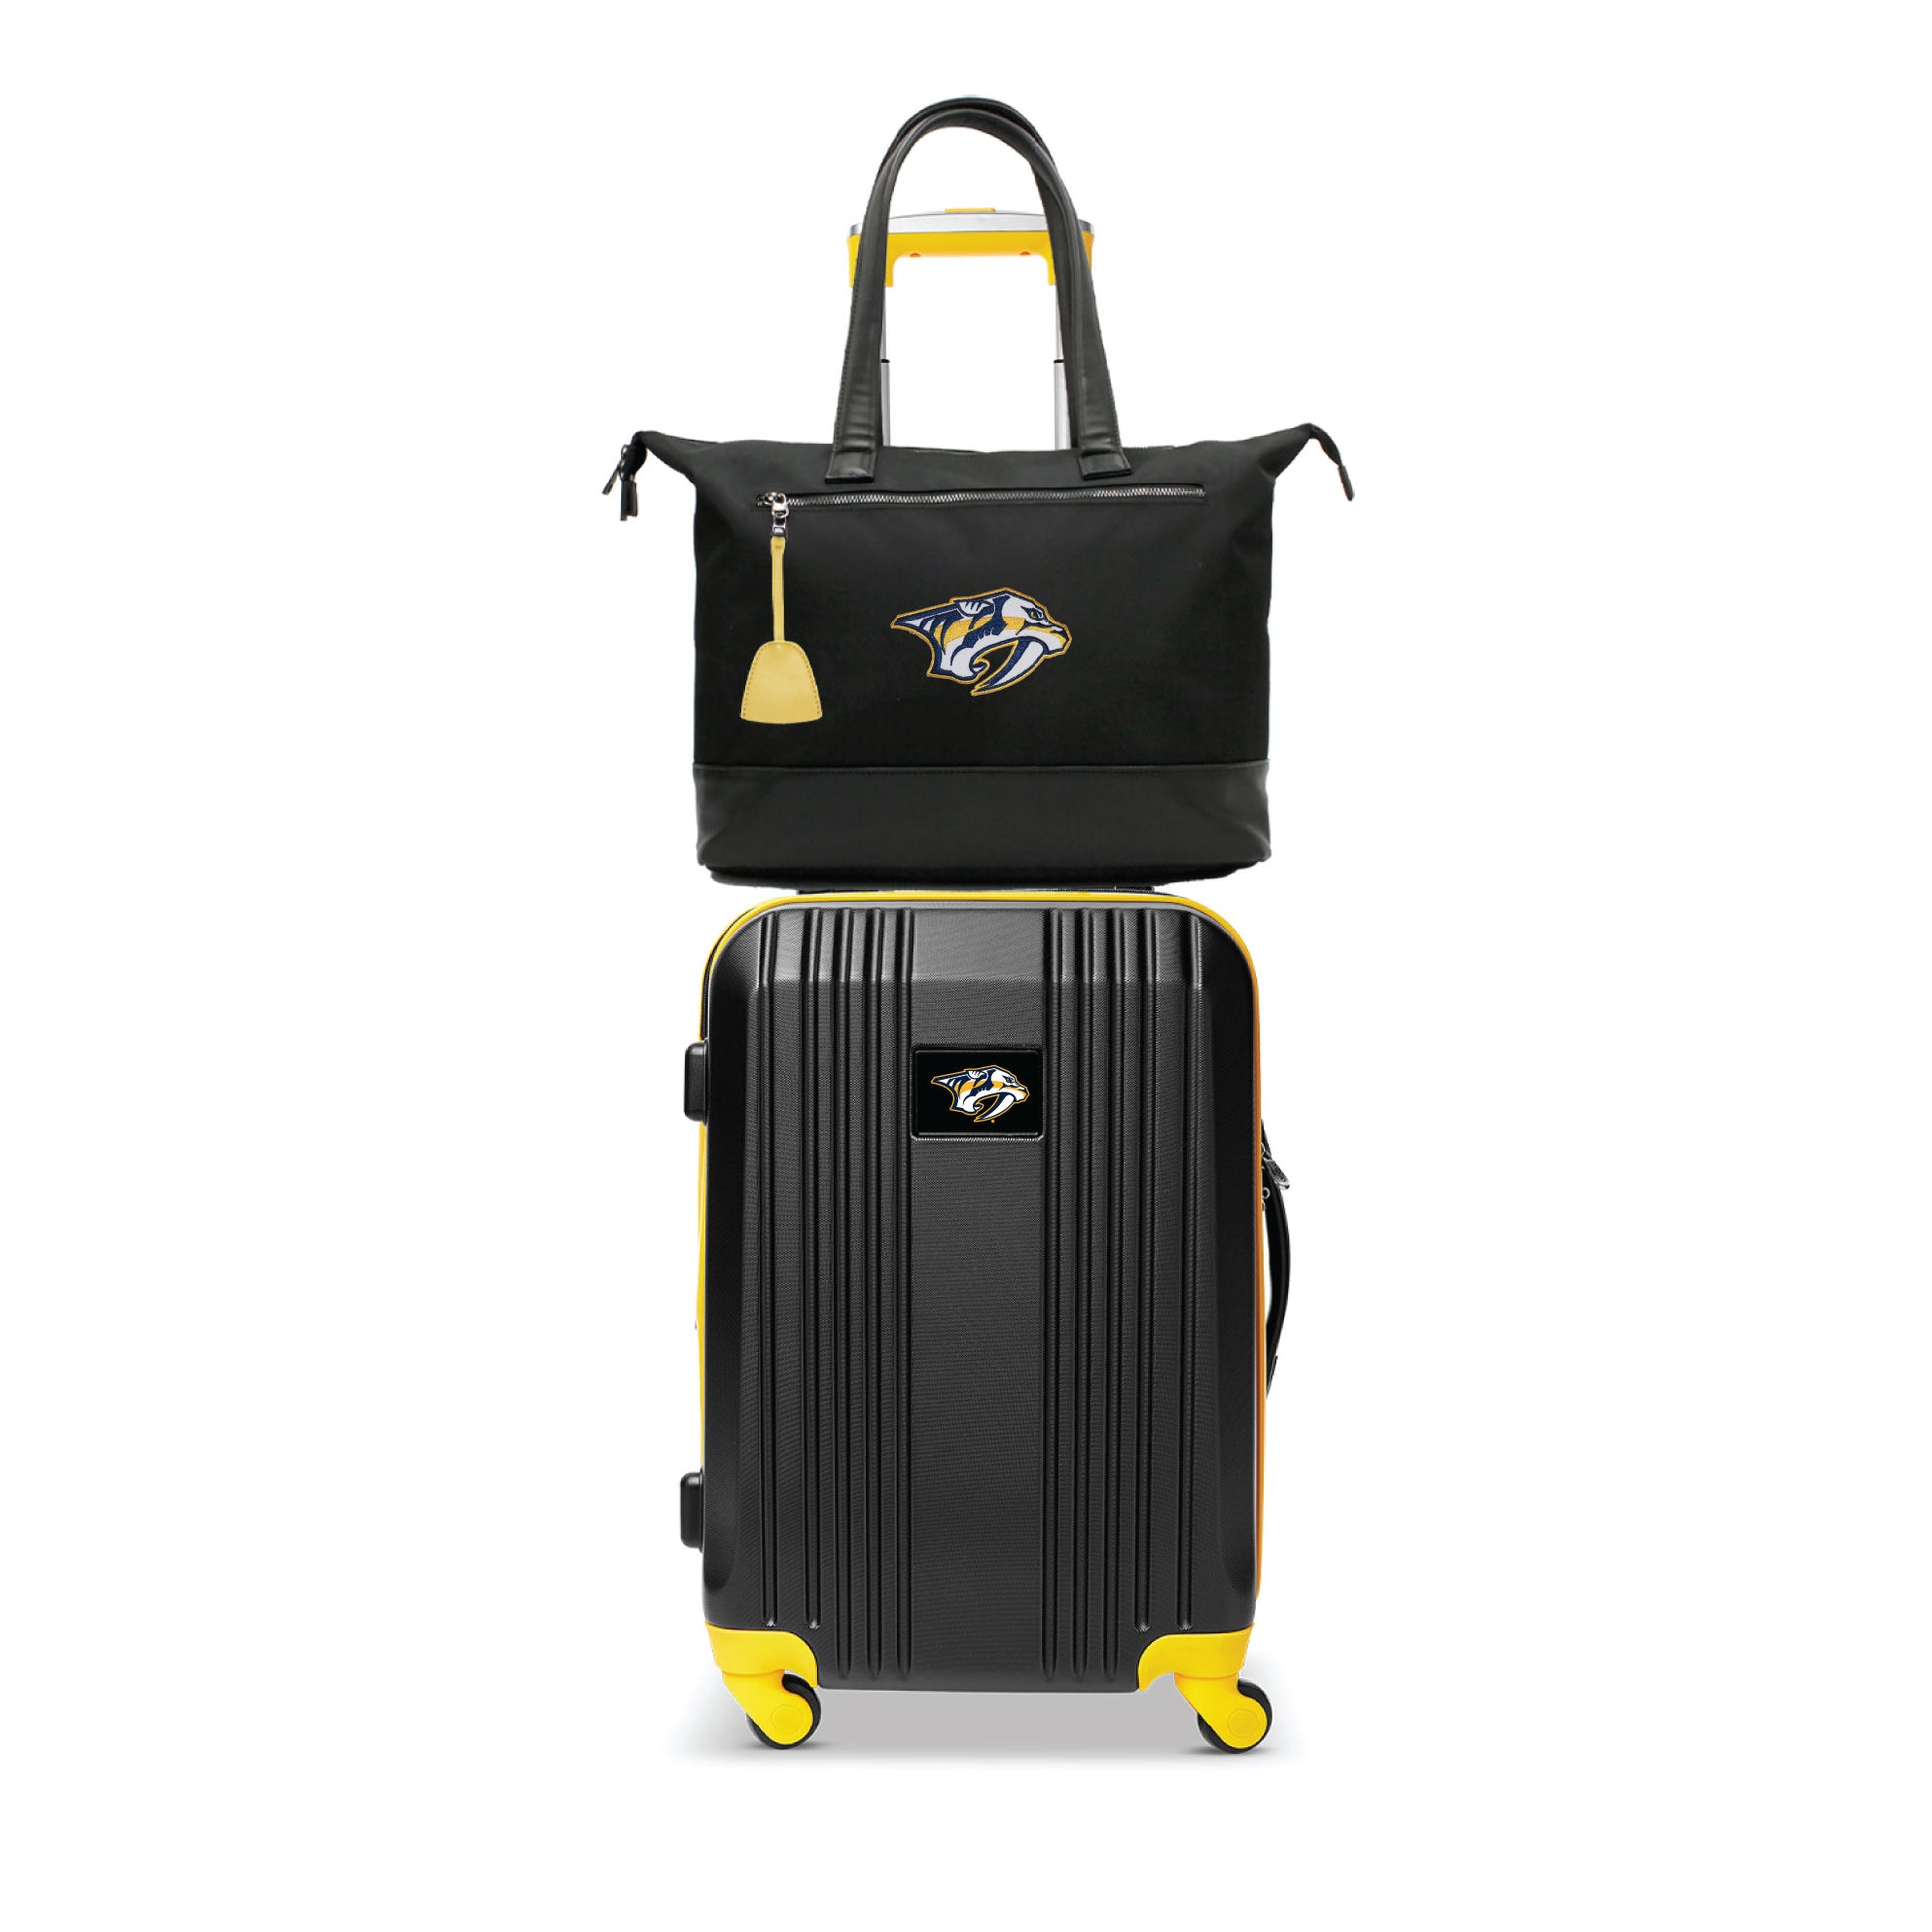 Nashville Predators Premium Laptop Tote Bag and Luggage Set